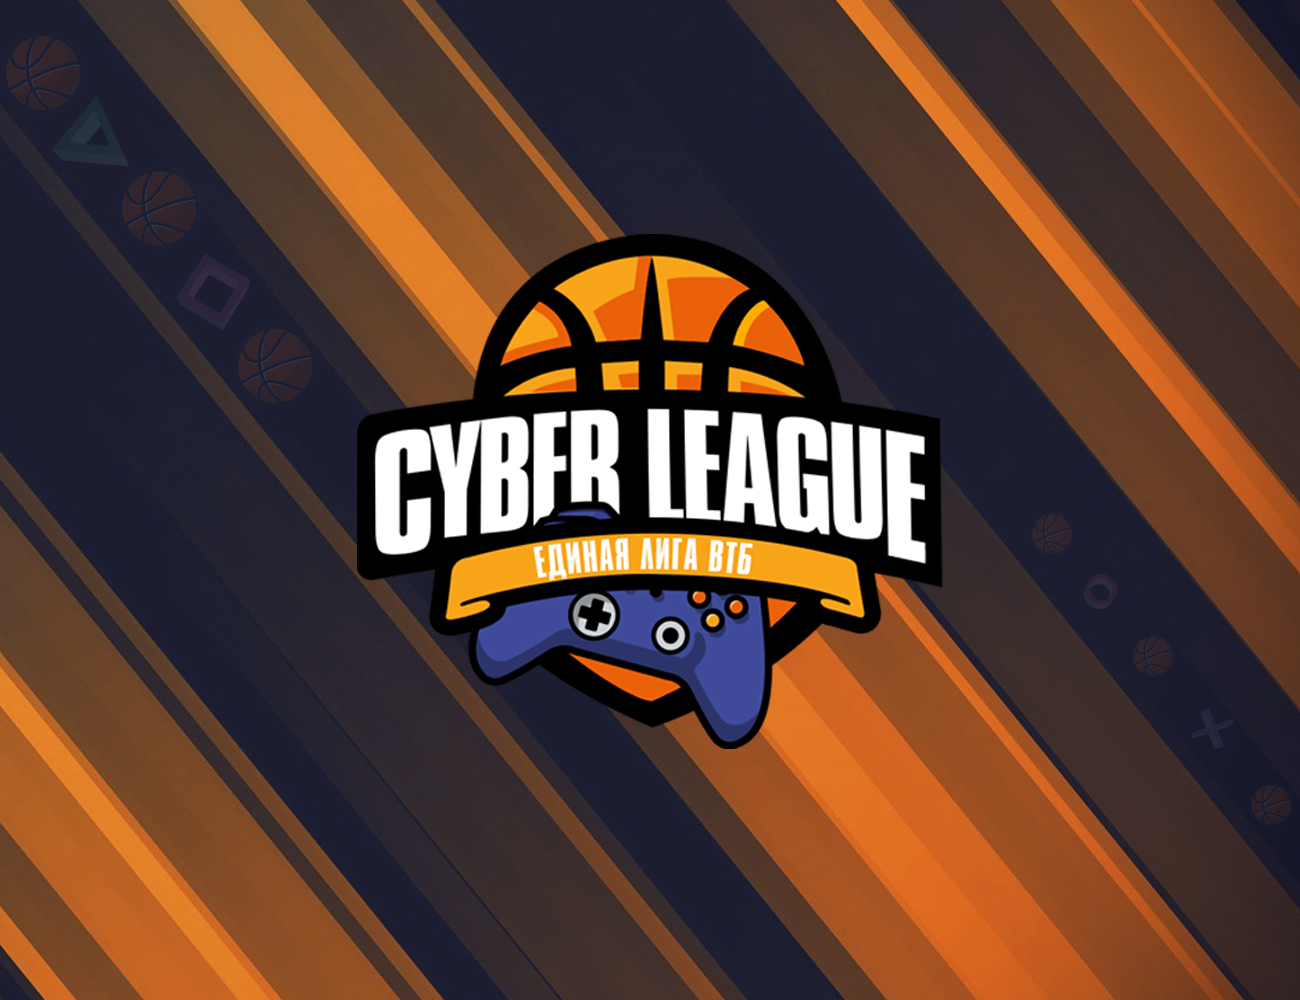 Единая лига ВТБ определила чемпиона киберспортивного турнира Cyber League